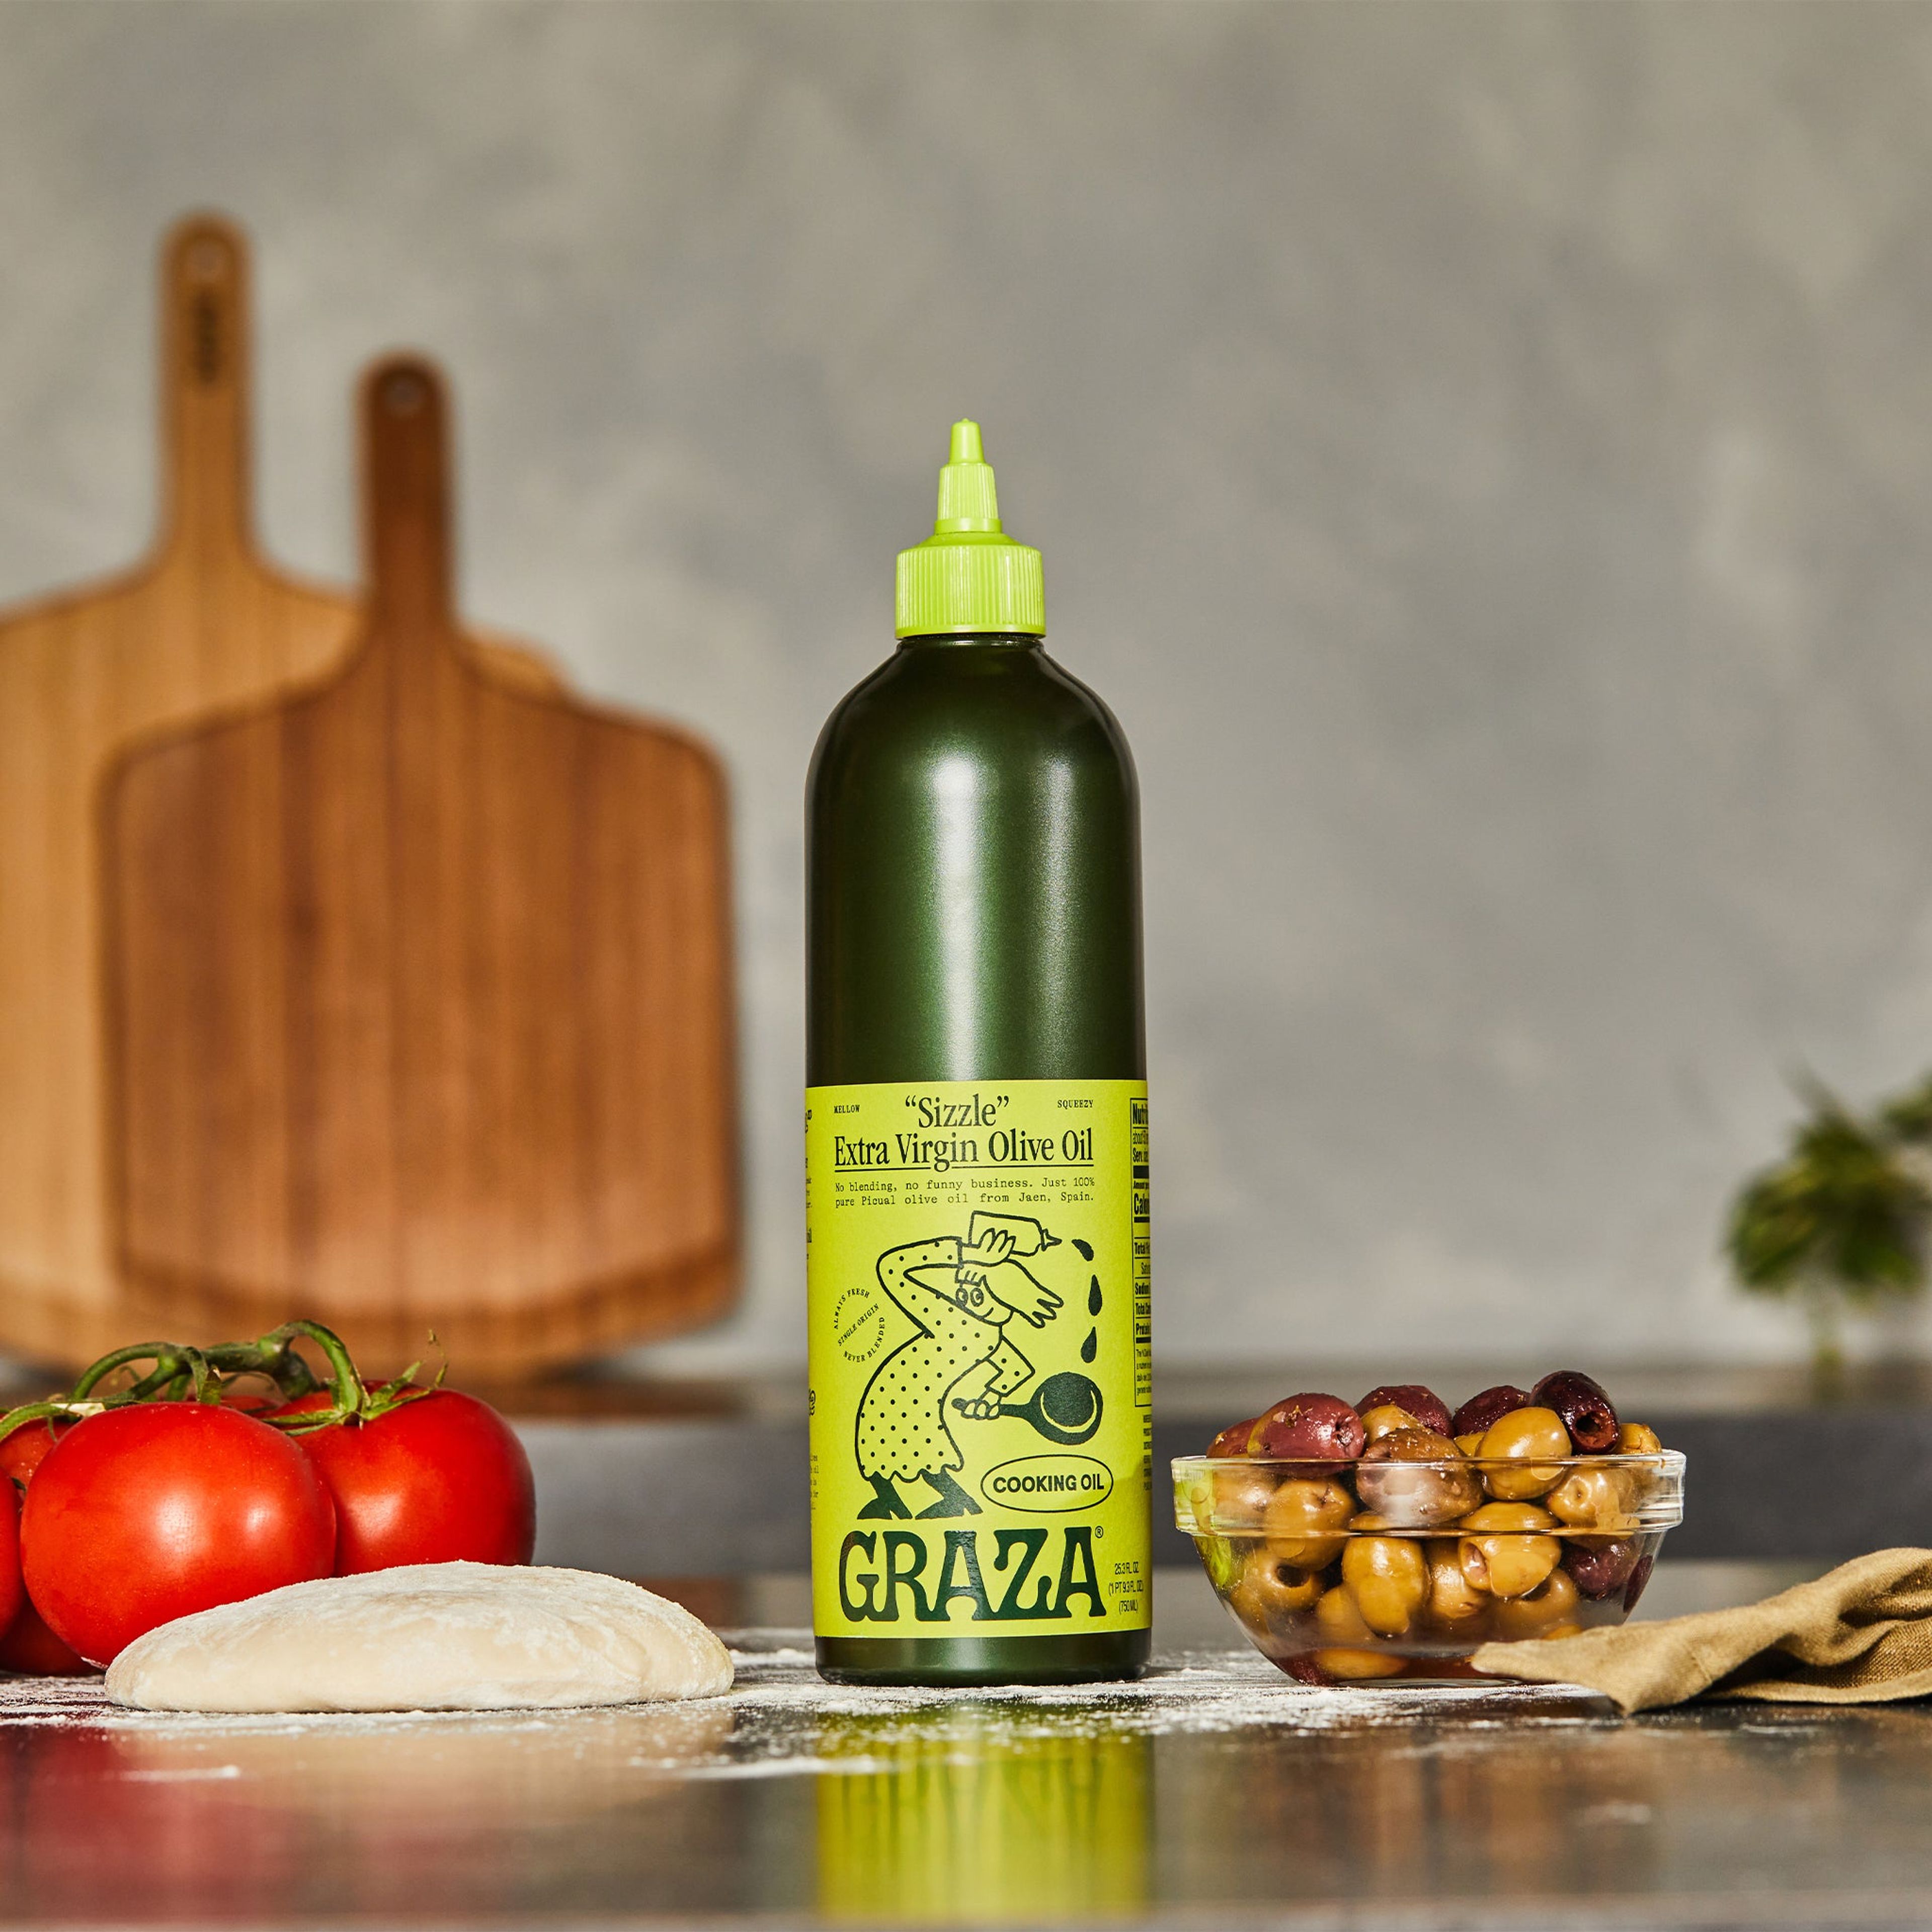 Graza Extra Virgin Olive Oil - Sizzle (750ml)